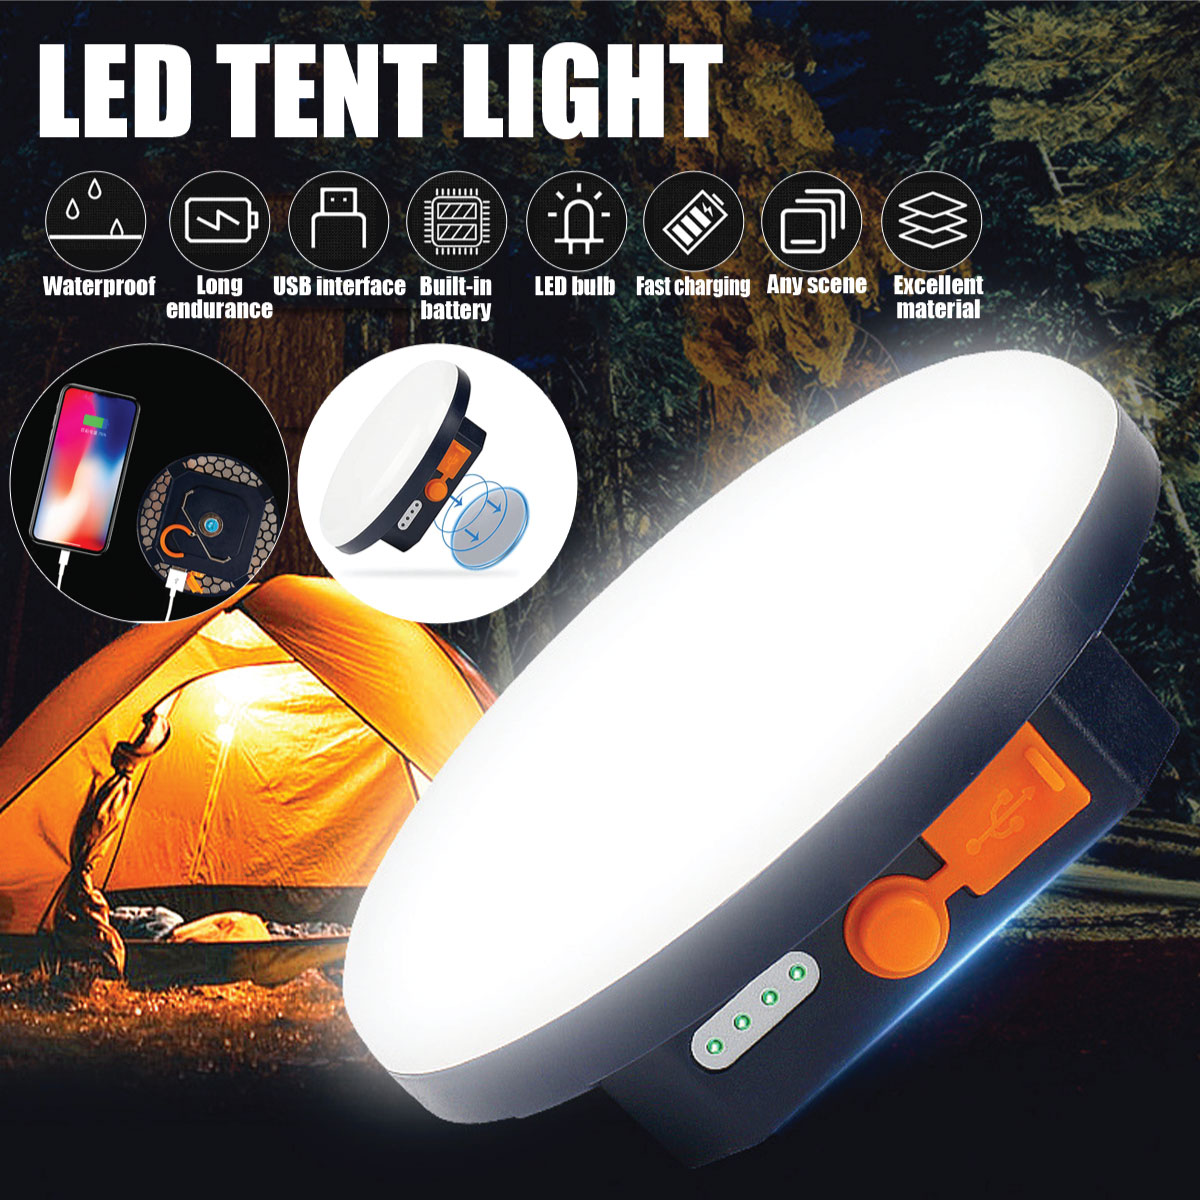 https://lightlicious.com/wp-content/uploads/2022/06/camping-lantern2.jpg